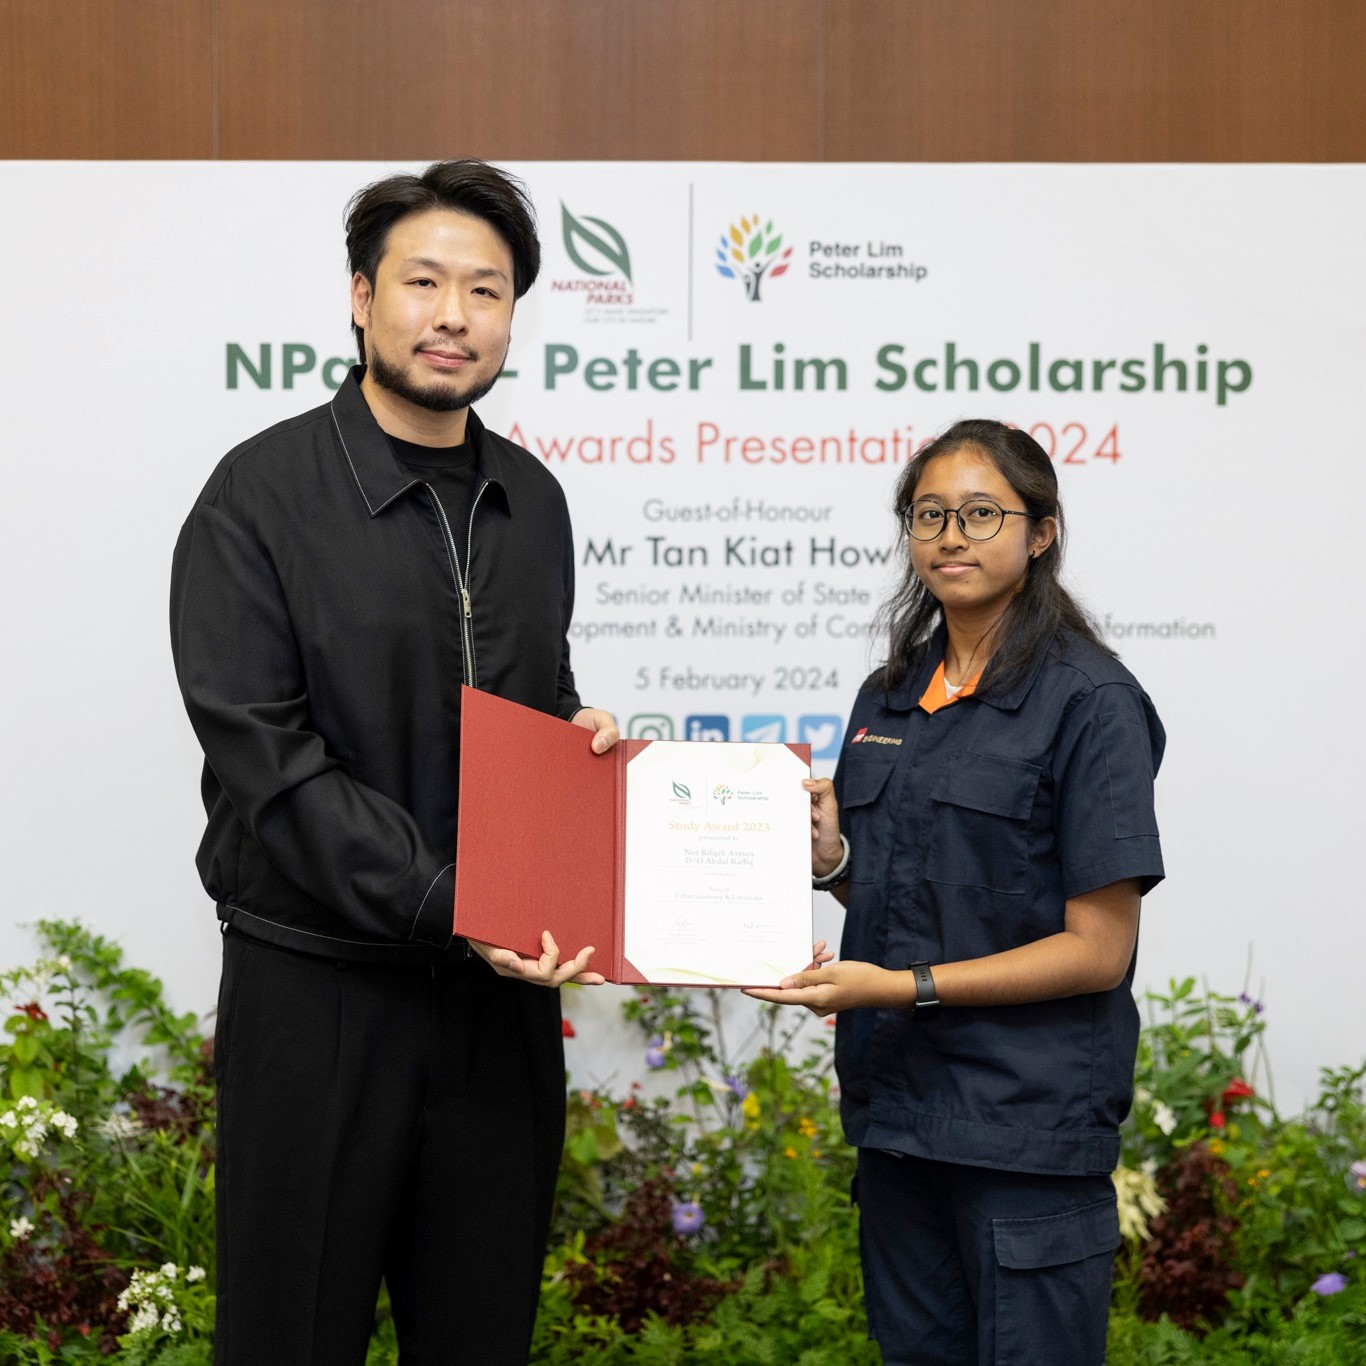 NParks-Peter Lim Scholarship2